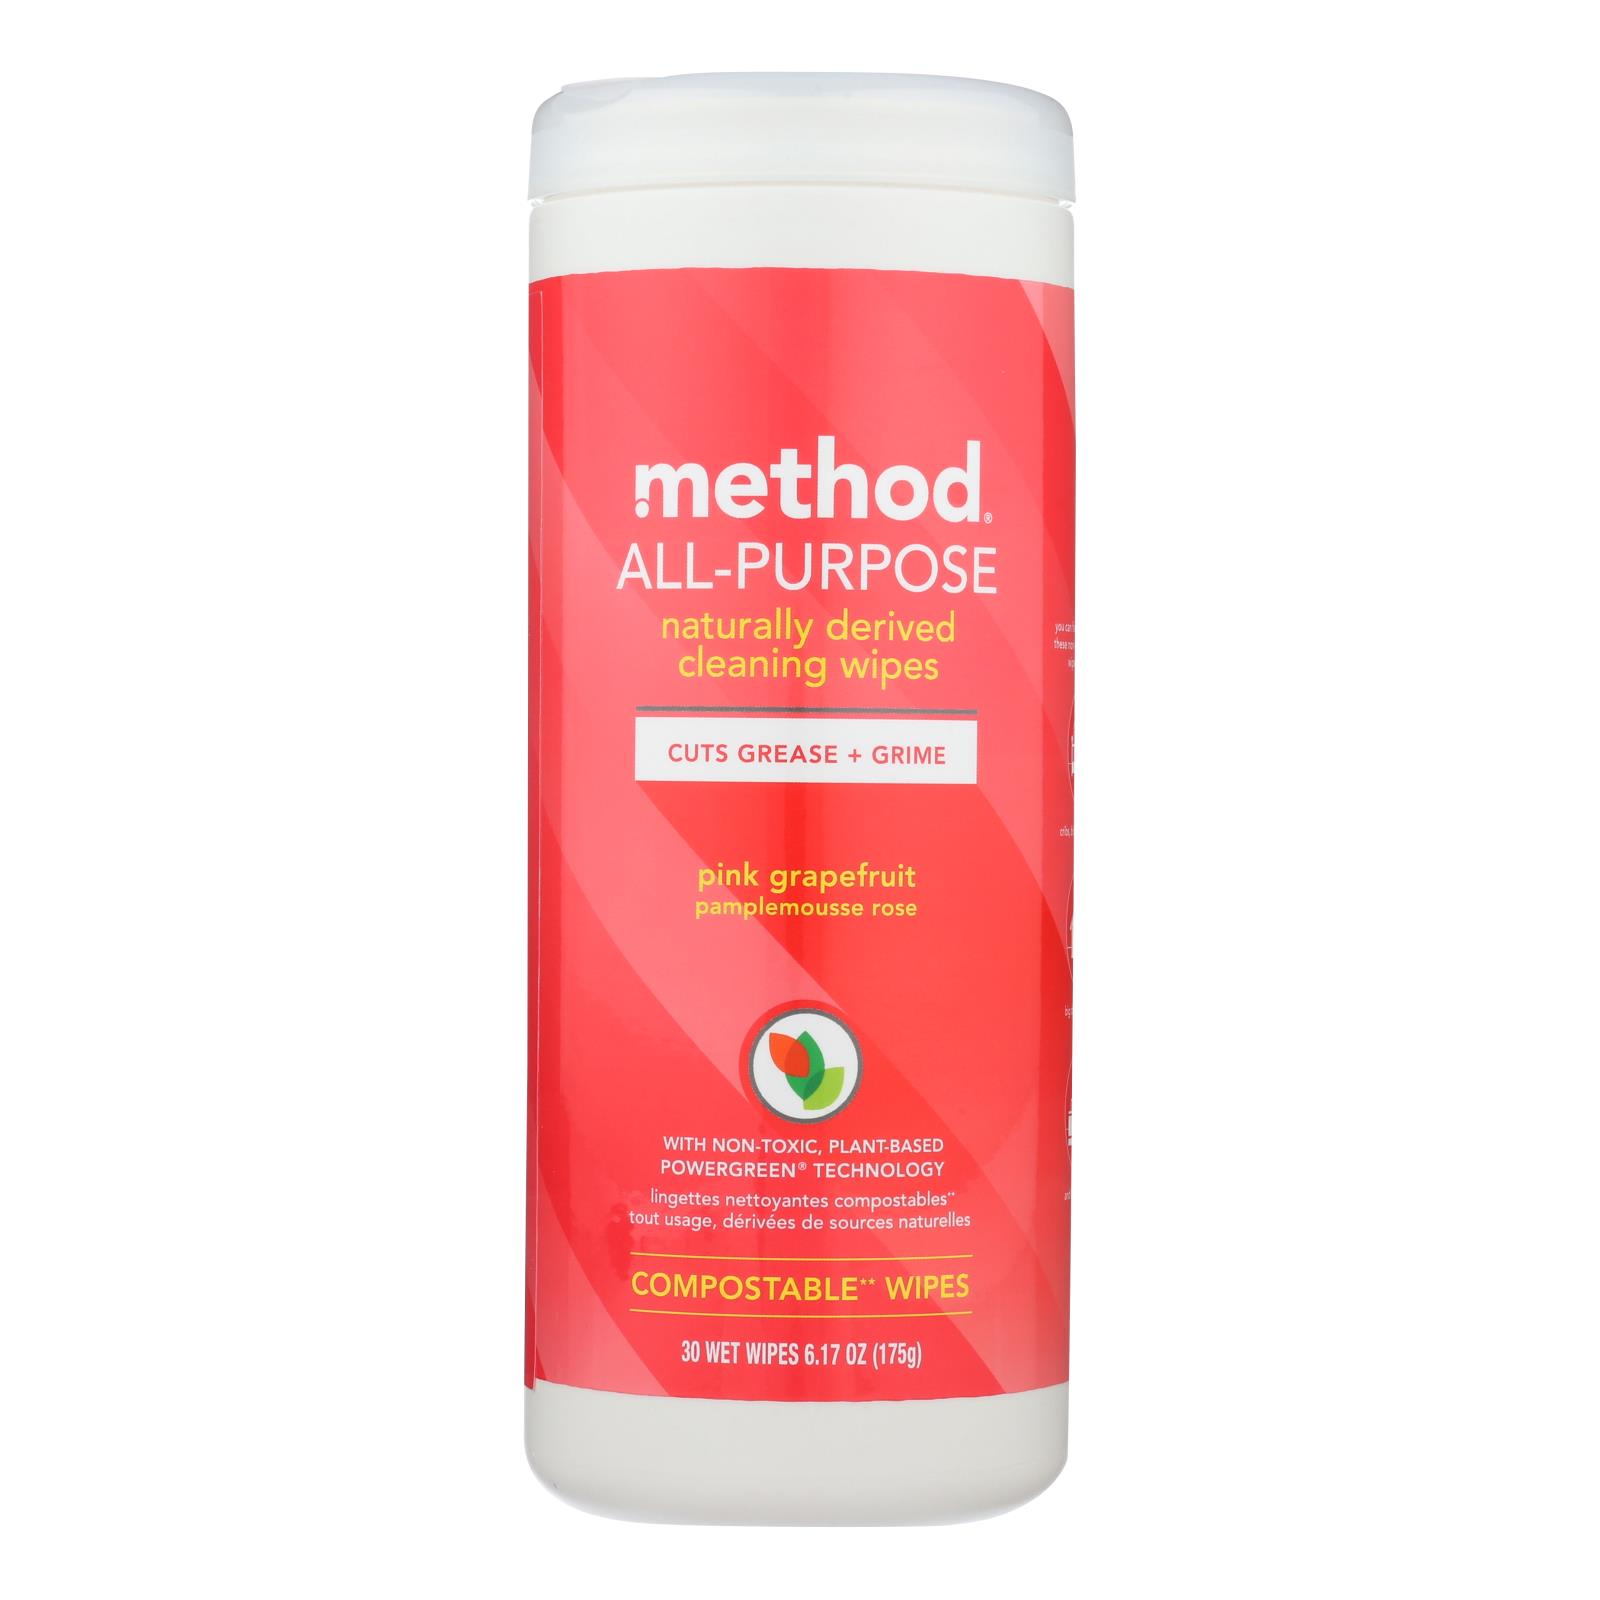 Method Products Inc - Wipes Ap Grapefruit - 6개 묶음상품 - 30 CT